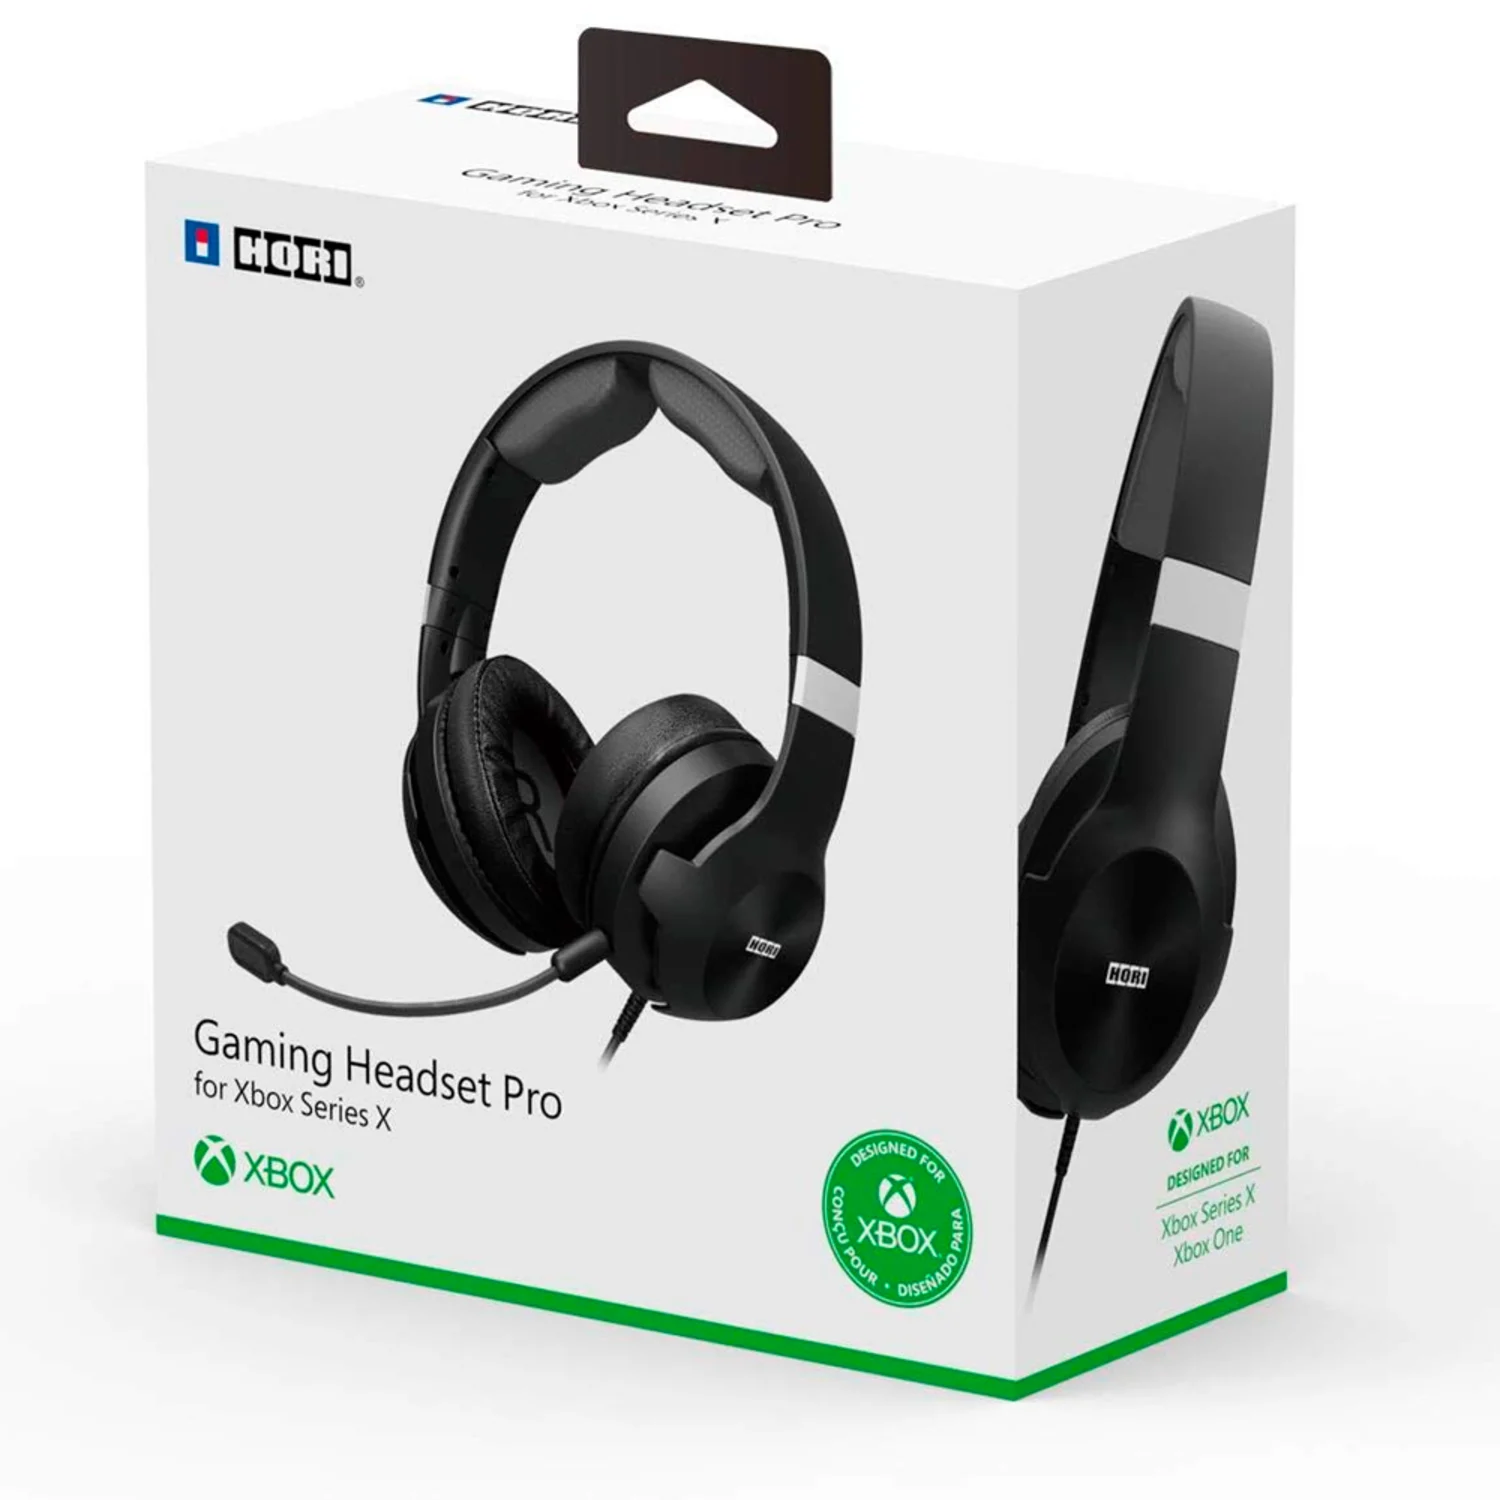 Headset Hori Gaming Pro para Xbox Series X/S - Preto (AB06-001U)